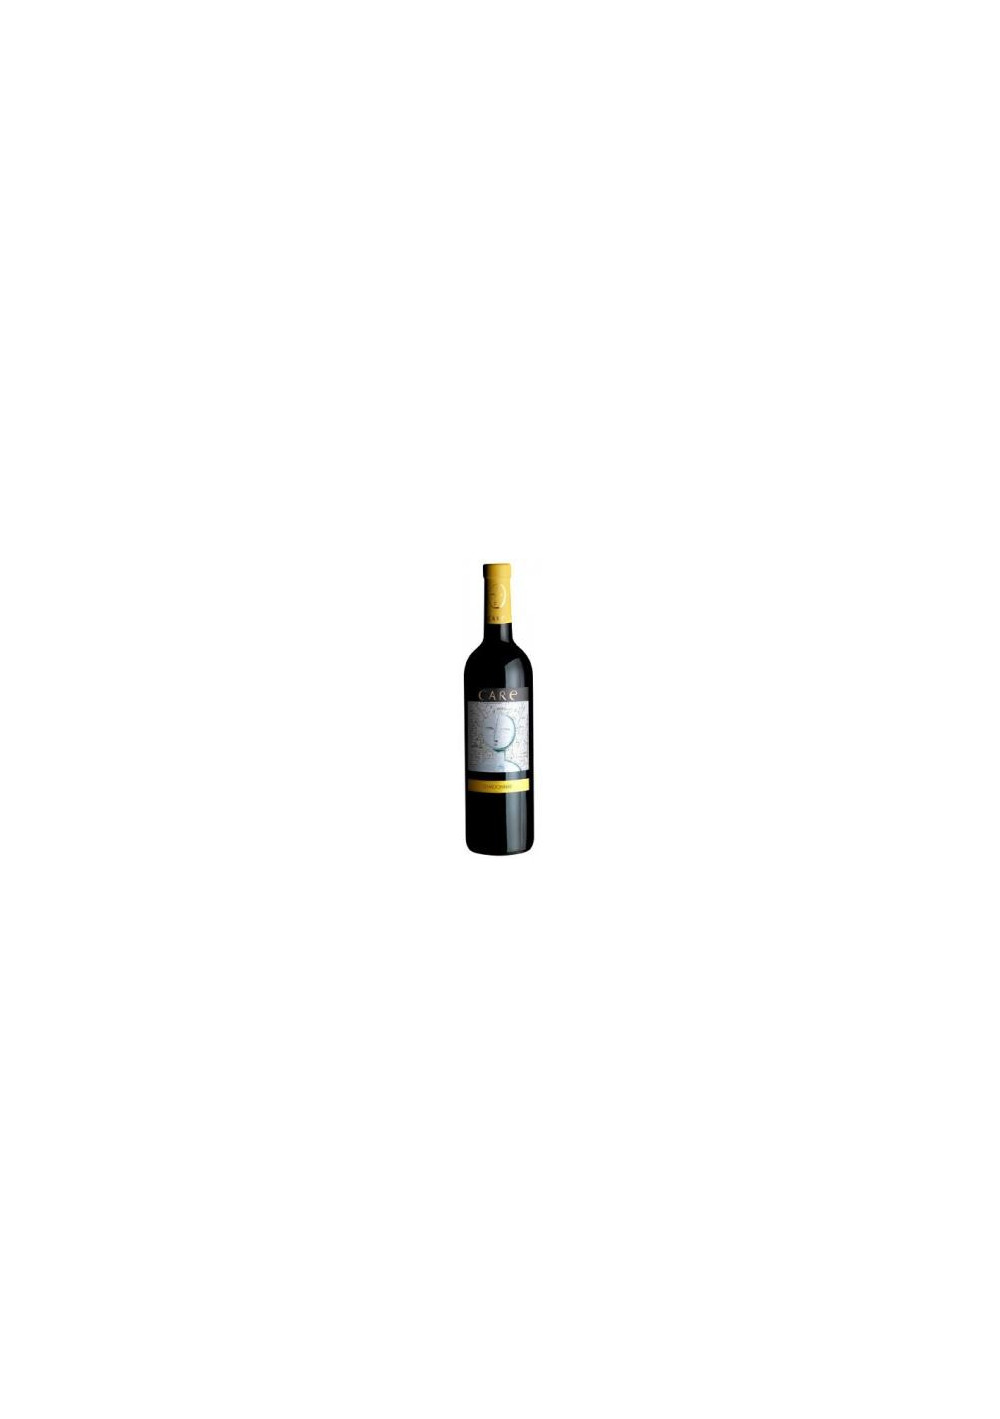 Care Chardonnay 2019 Bodegas Añadas Cariñena